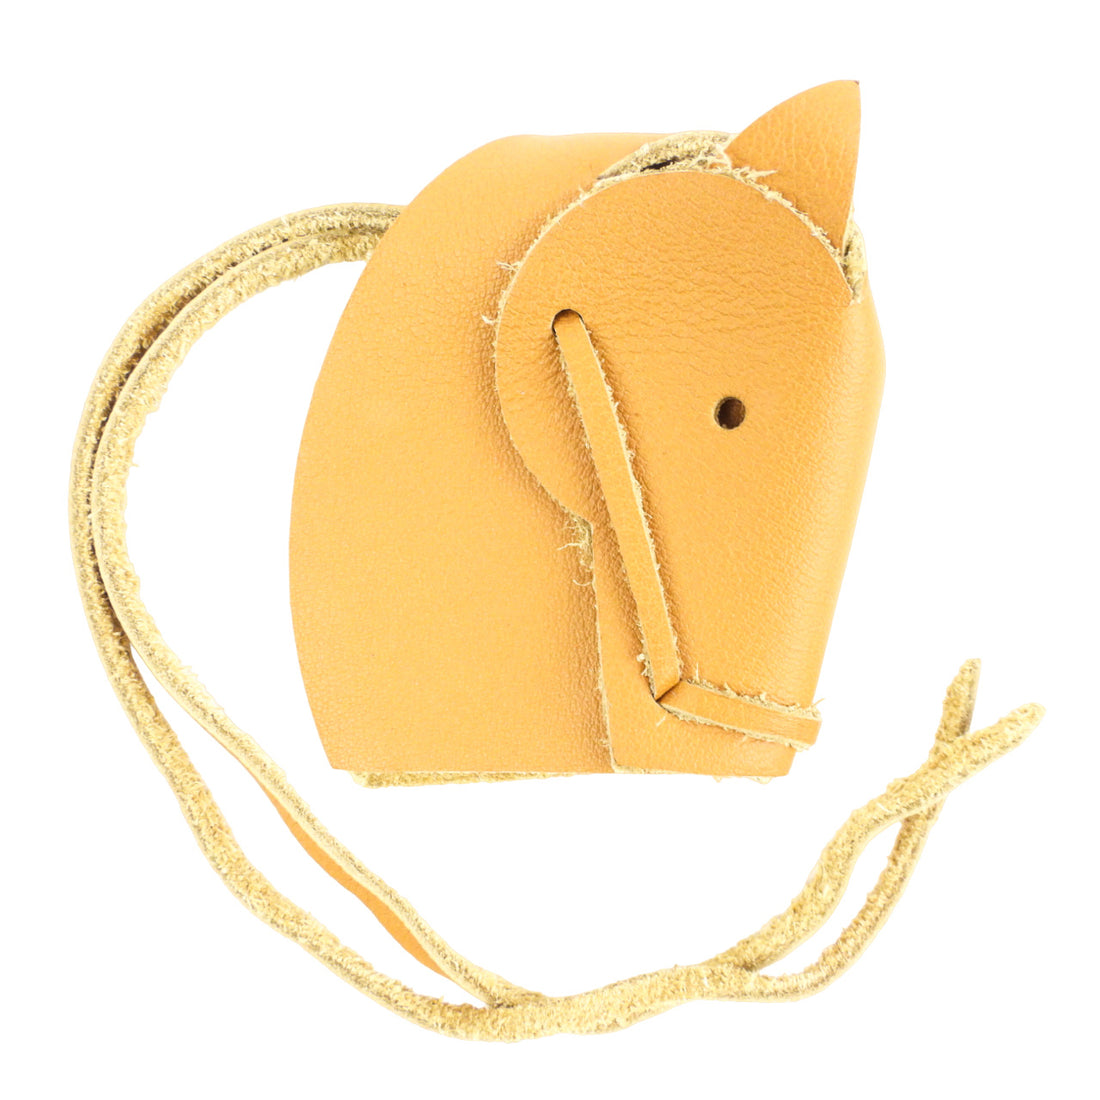 Hermes Orange Swift Leather Tete de Cheval Horse Bag Charm